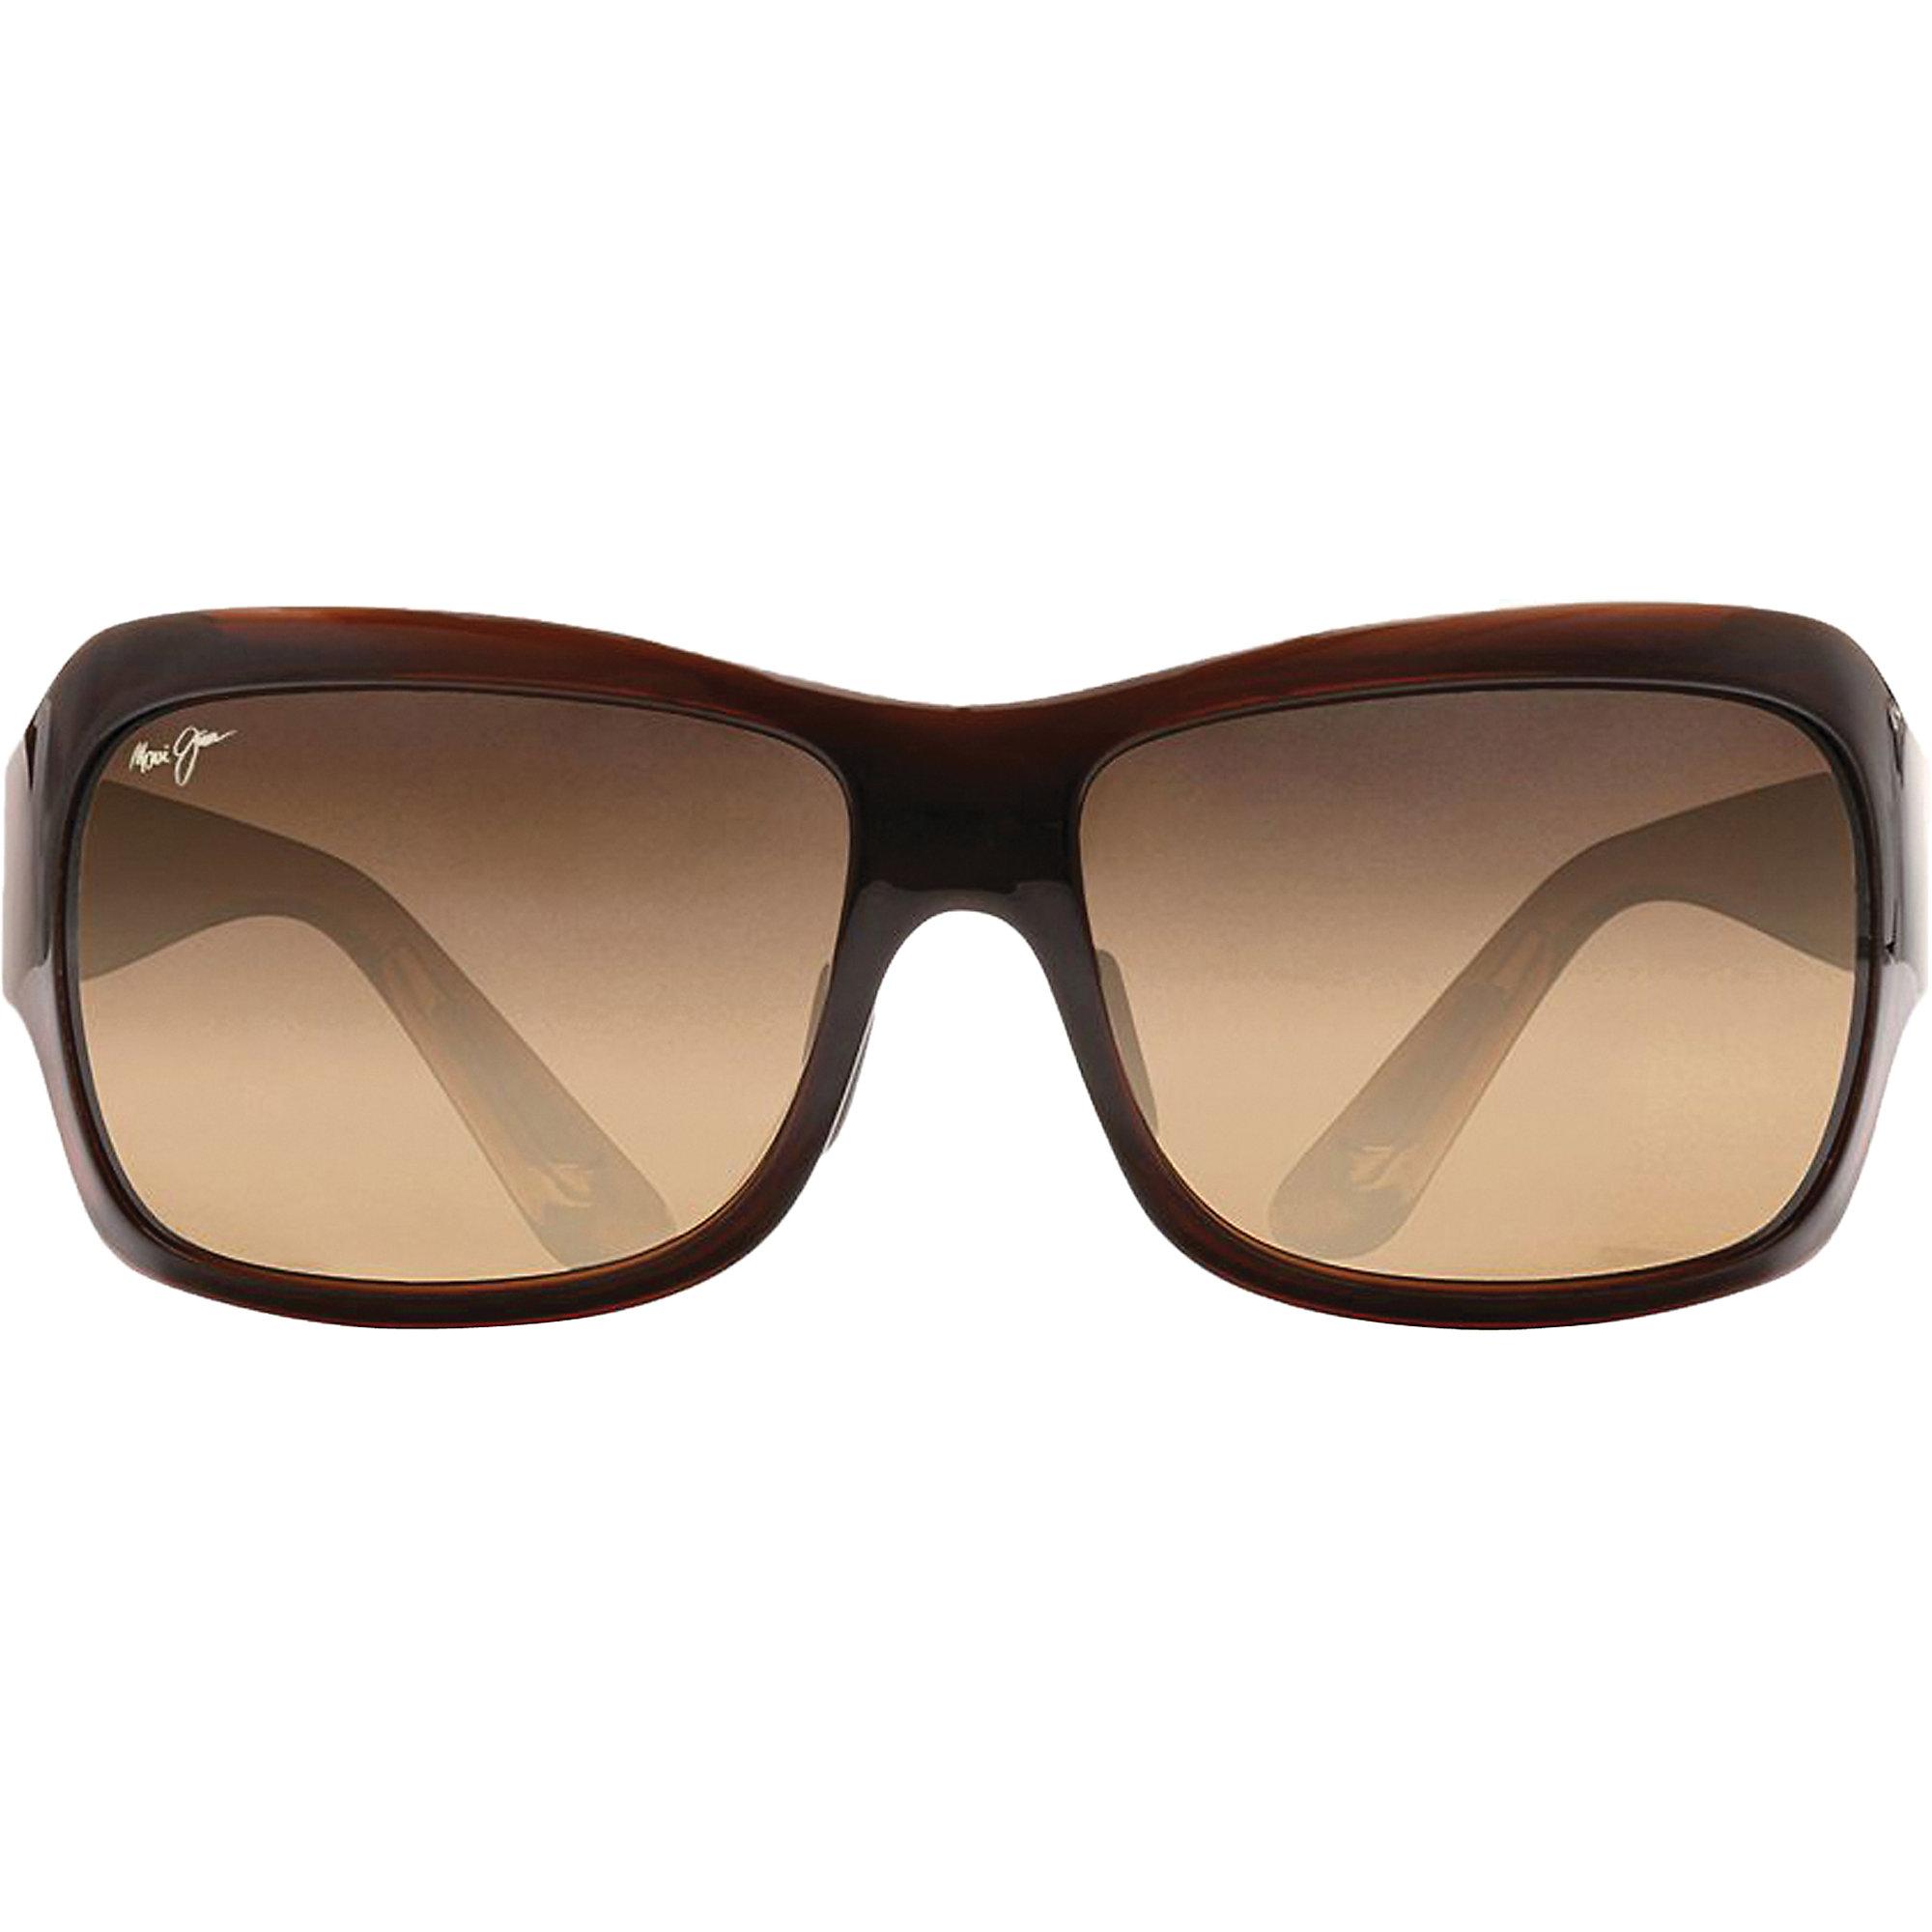 Maui Jim Seven Pools Polarized Sunglasses in Brown - Lyst